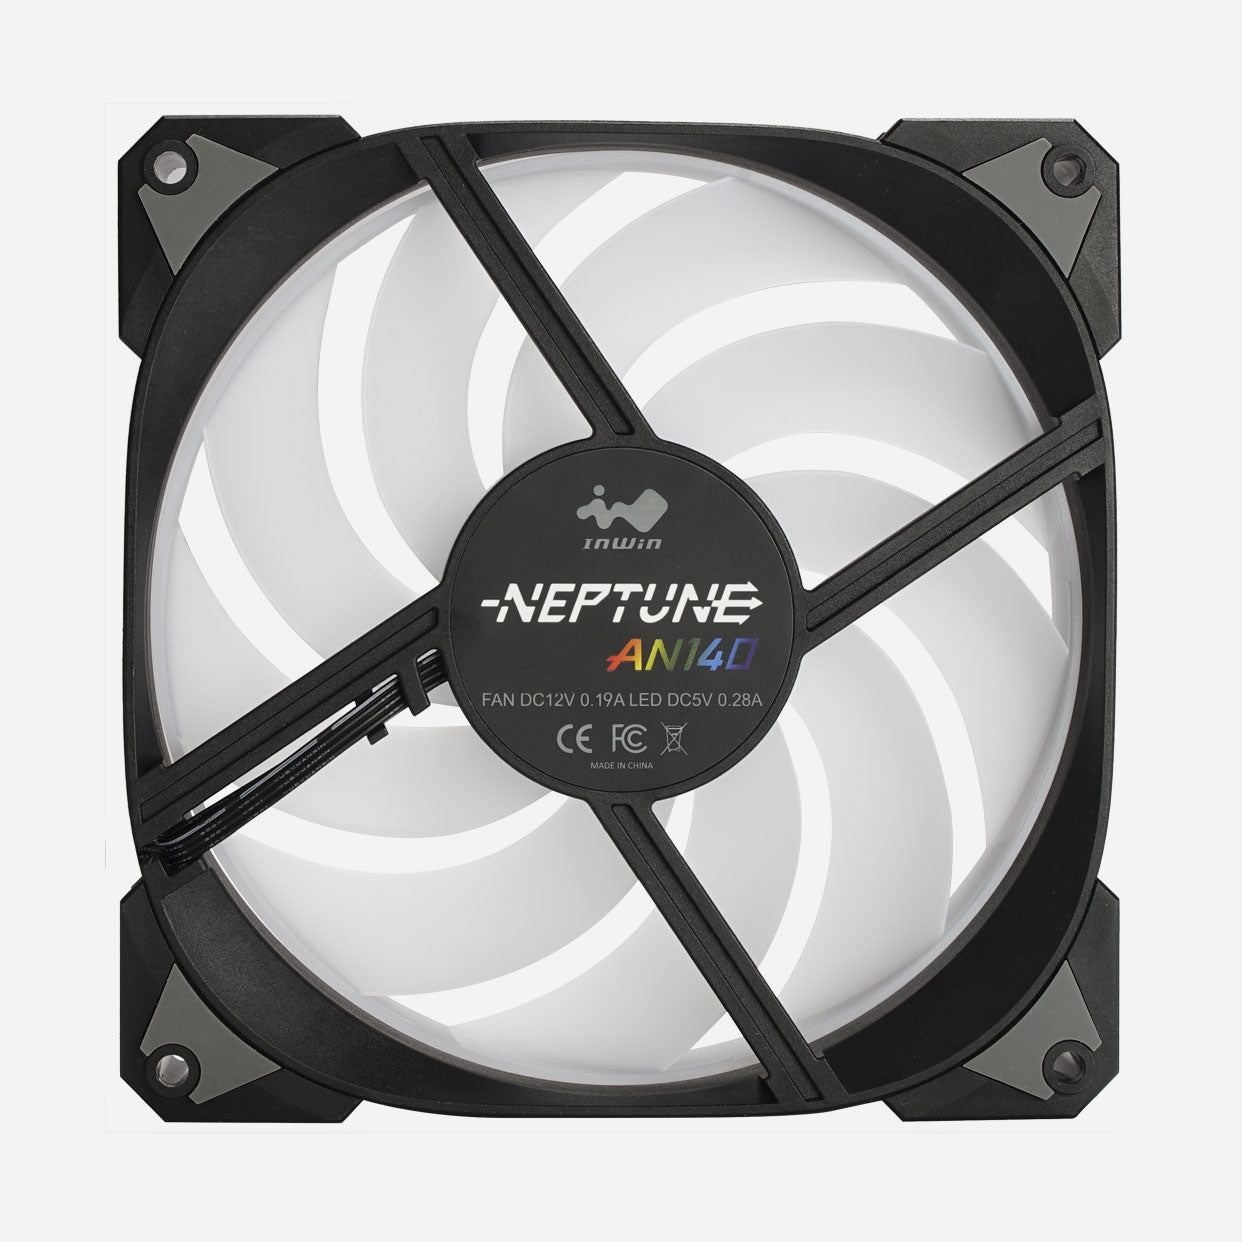 Neptune Turbine Blade Design ARGB 140mm Triple Pack